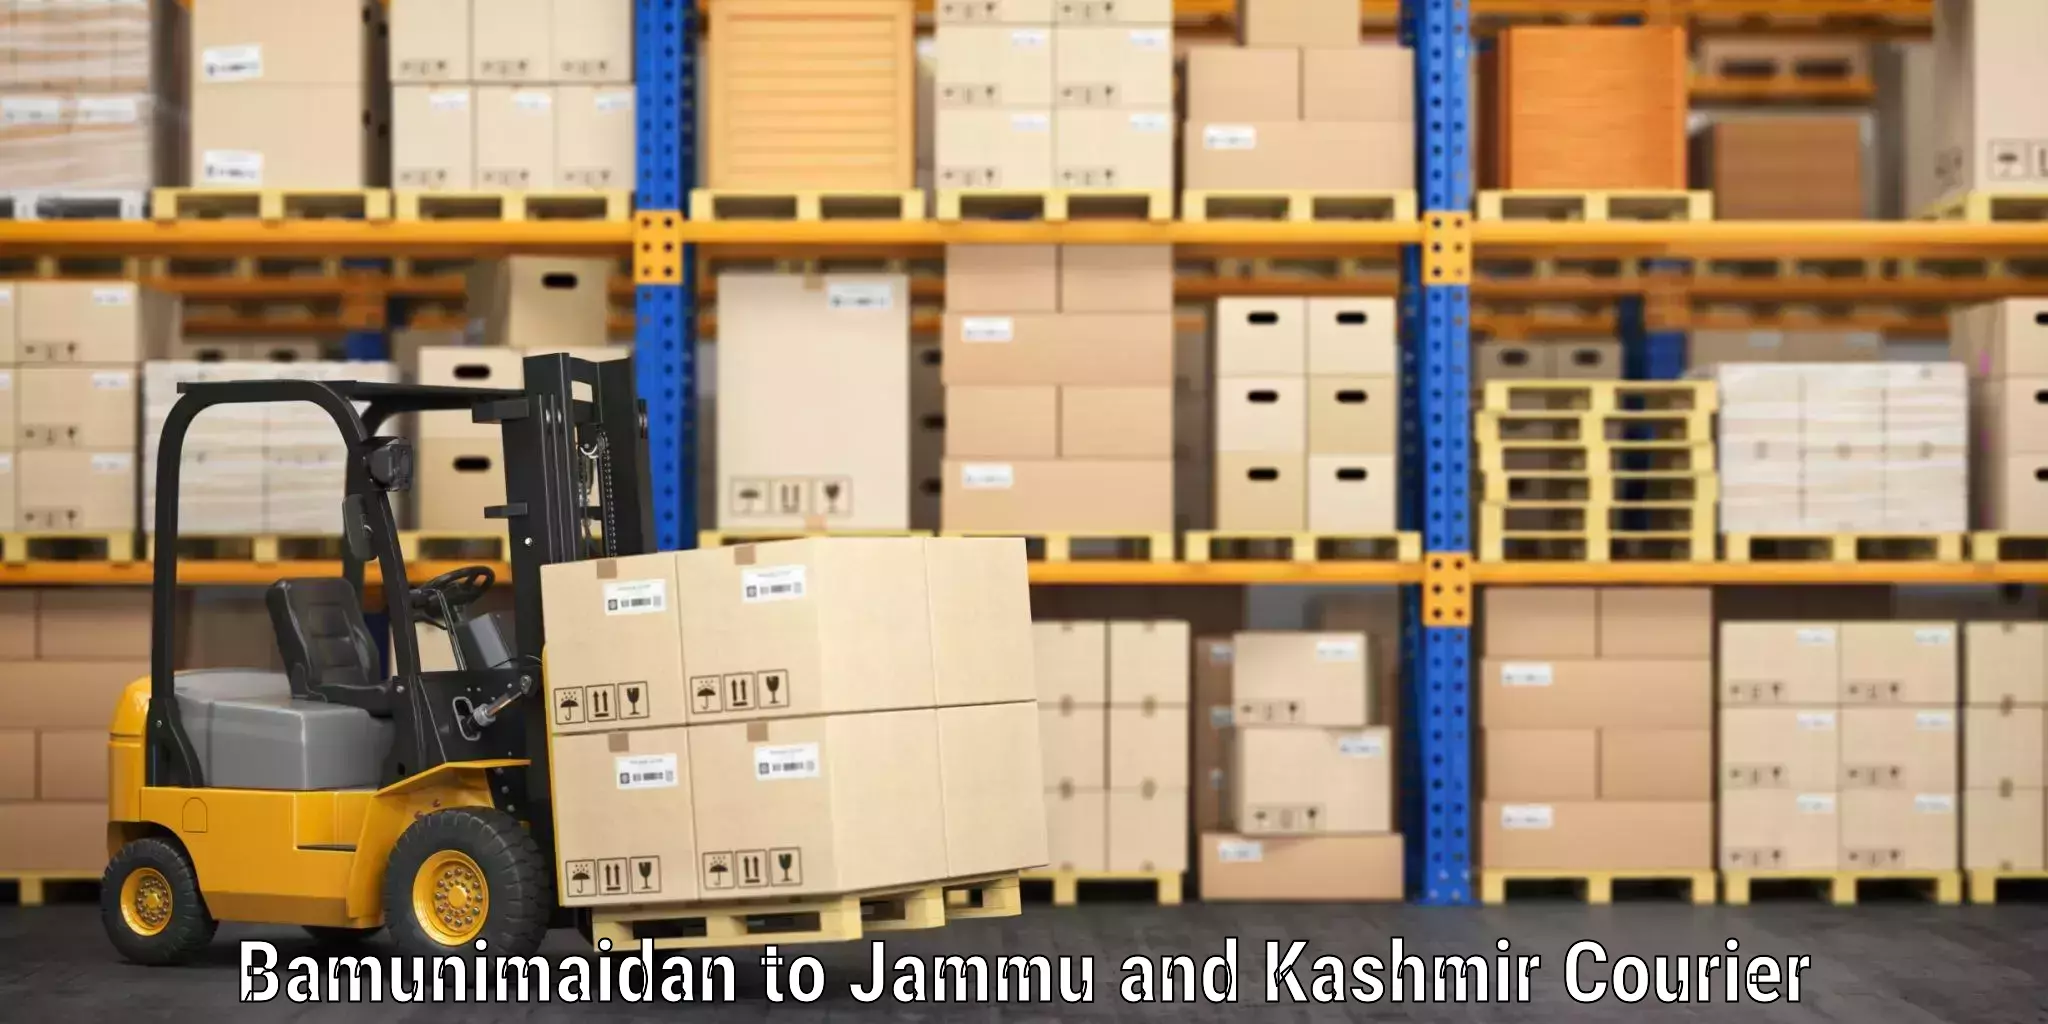 Luggage shipment processing in Bamunimaidan to Jammu and Kashmir